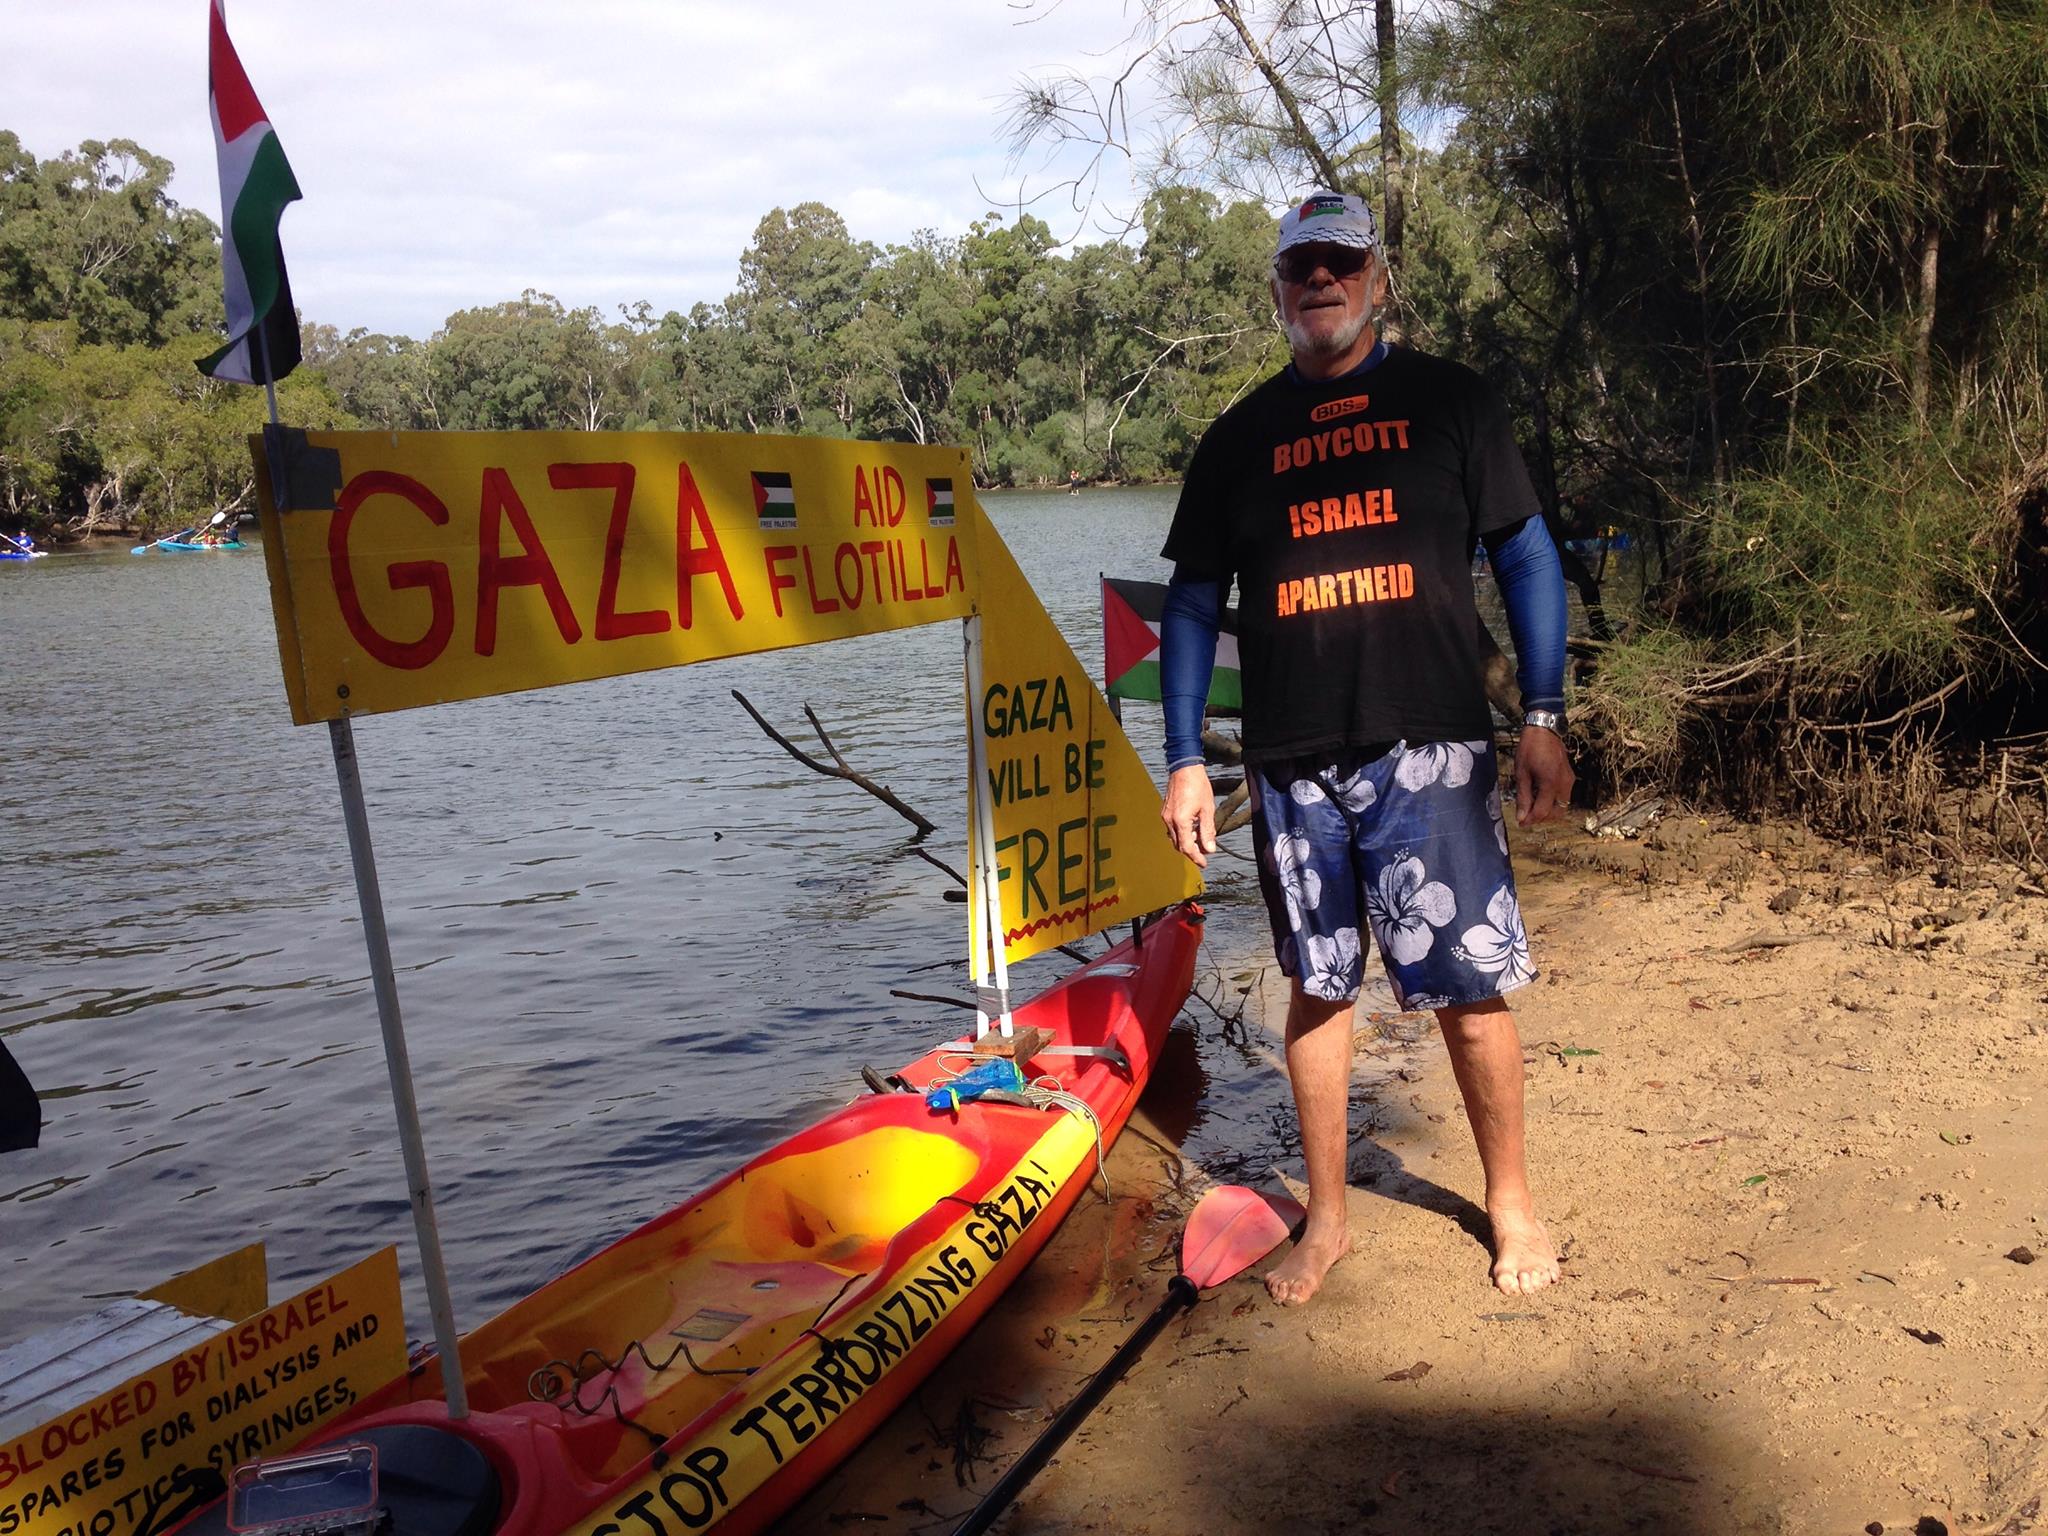 Gareth Smith in pro gaza shirt next to pro gaza signs